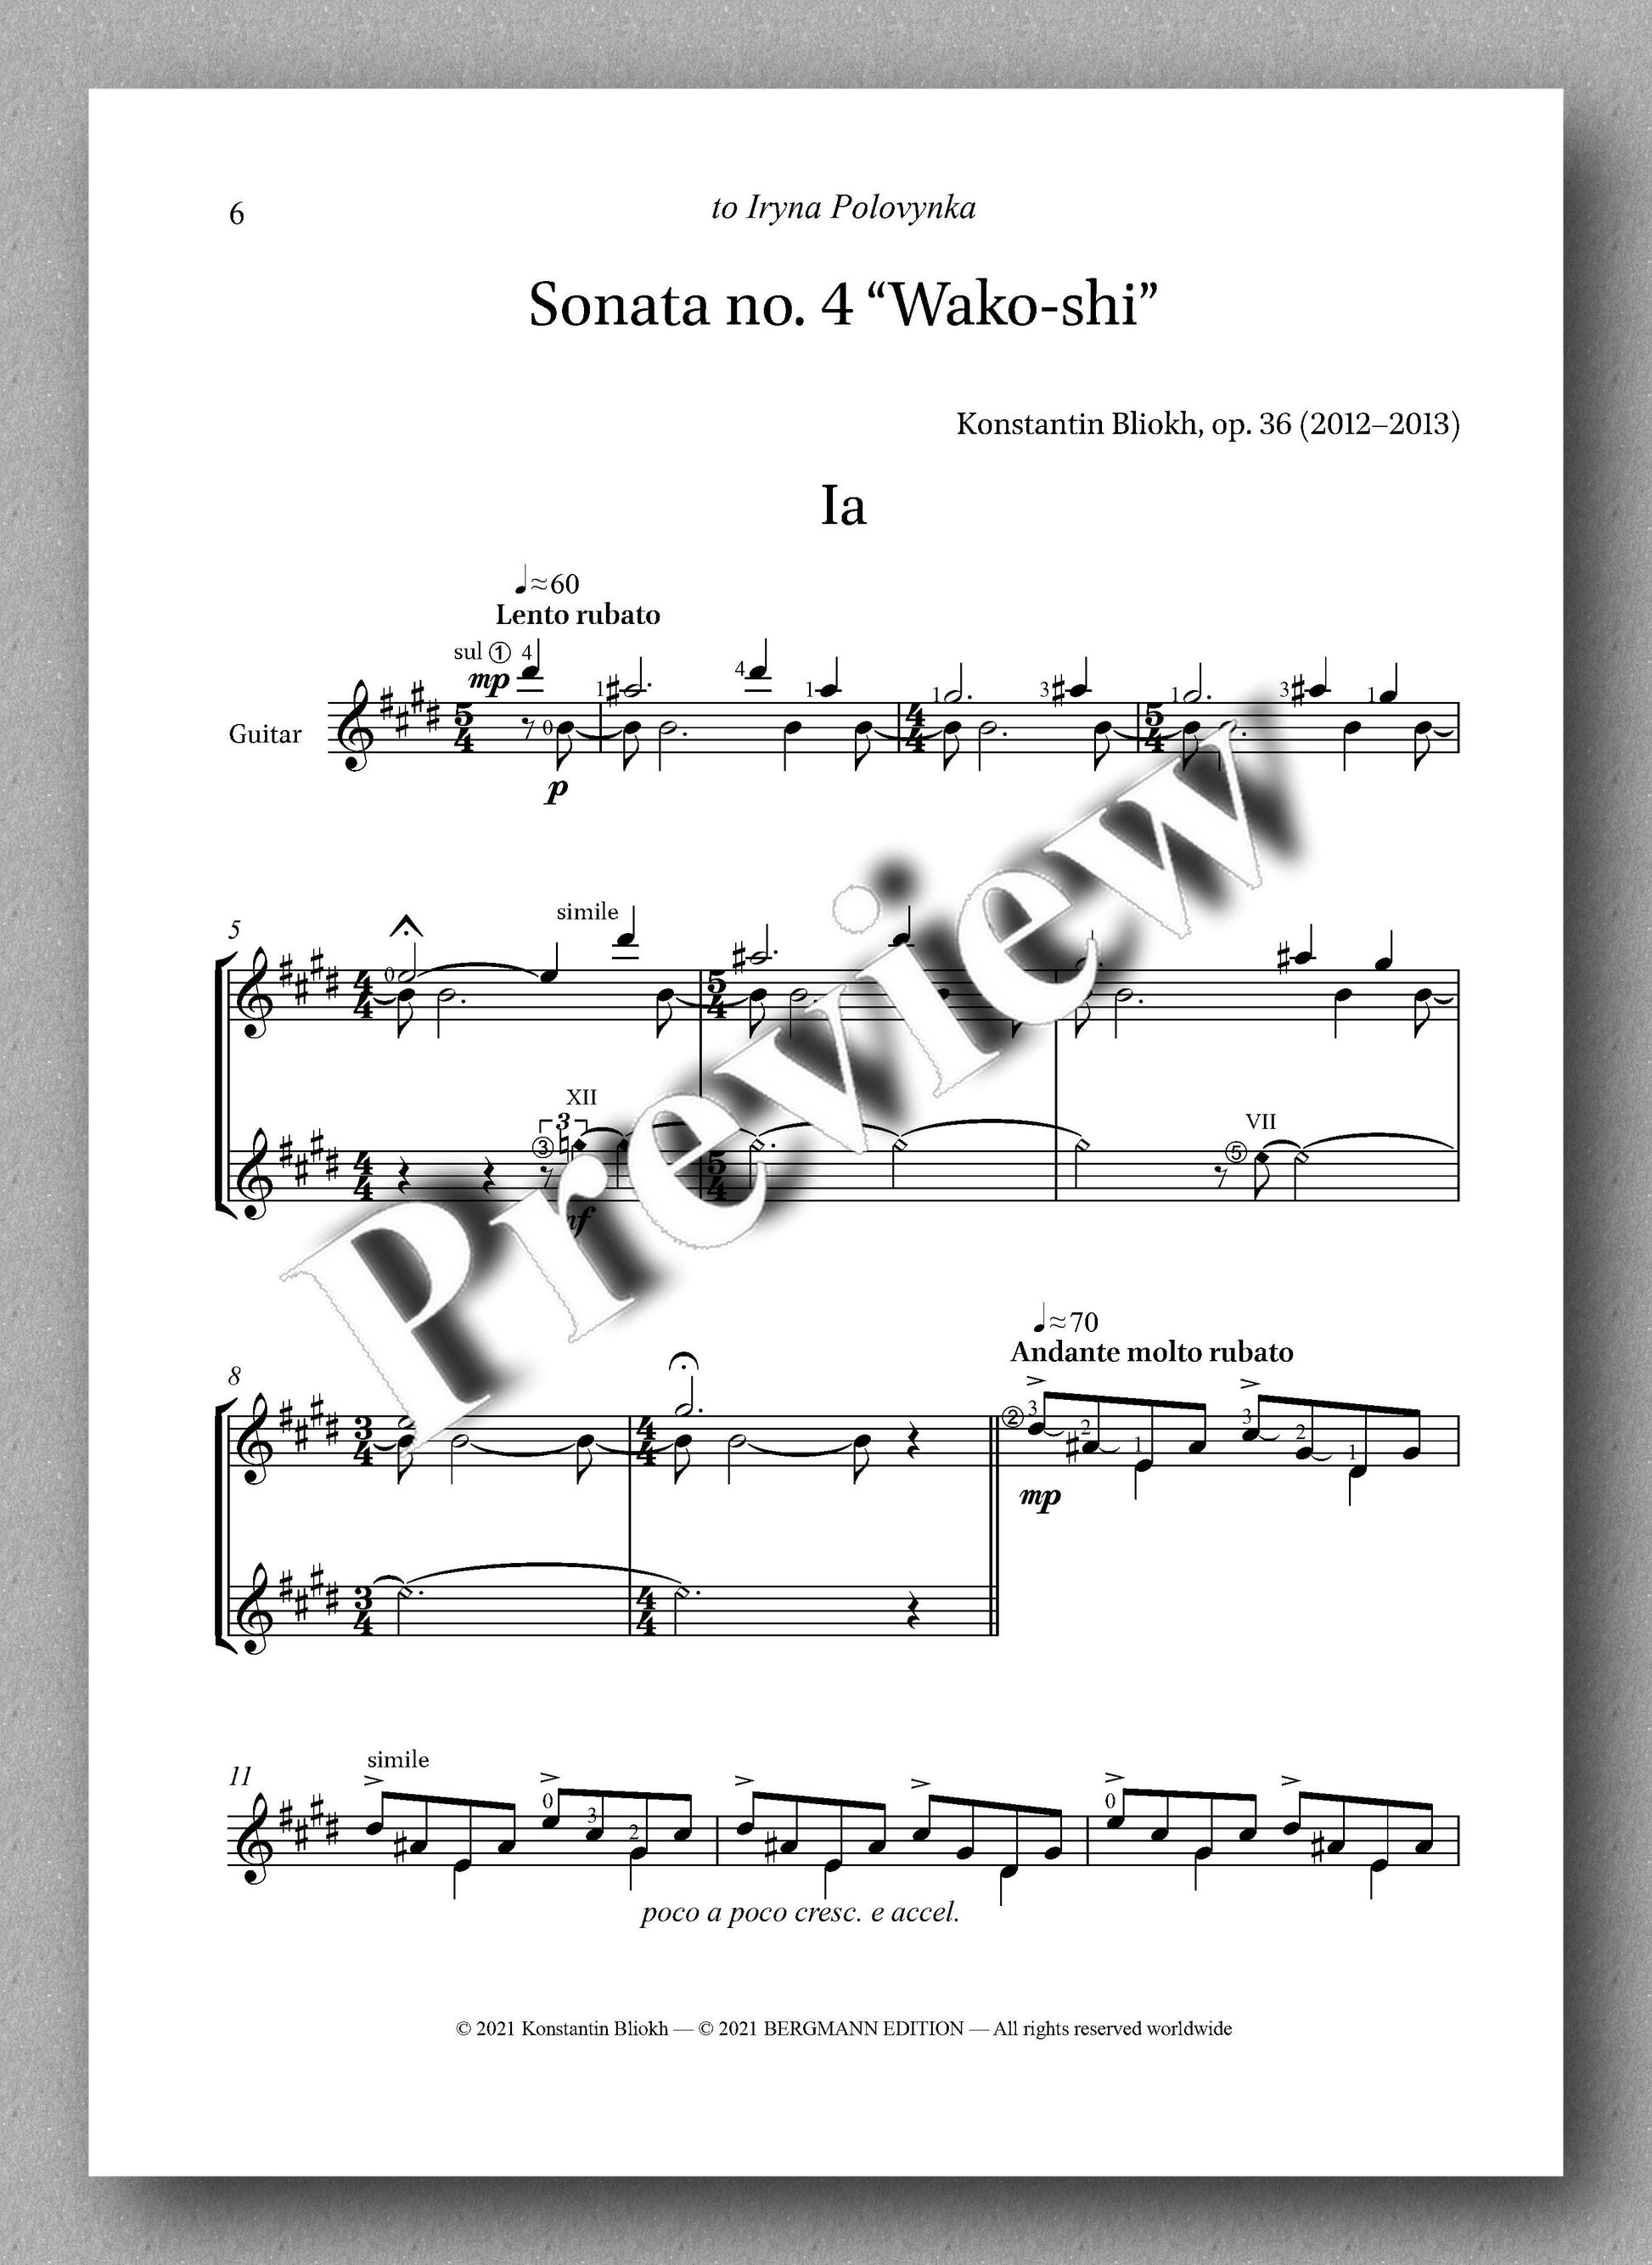 Bliokh, Sonata No. 4, Wako-Shi - music score  1